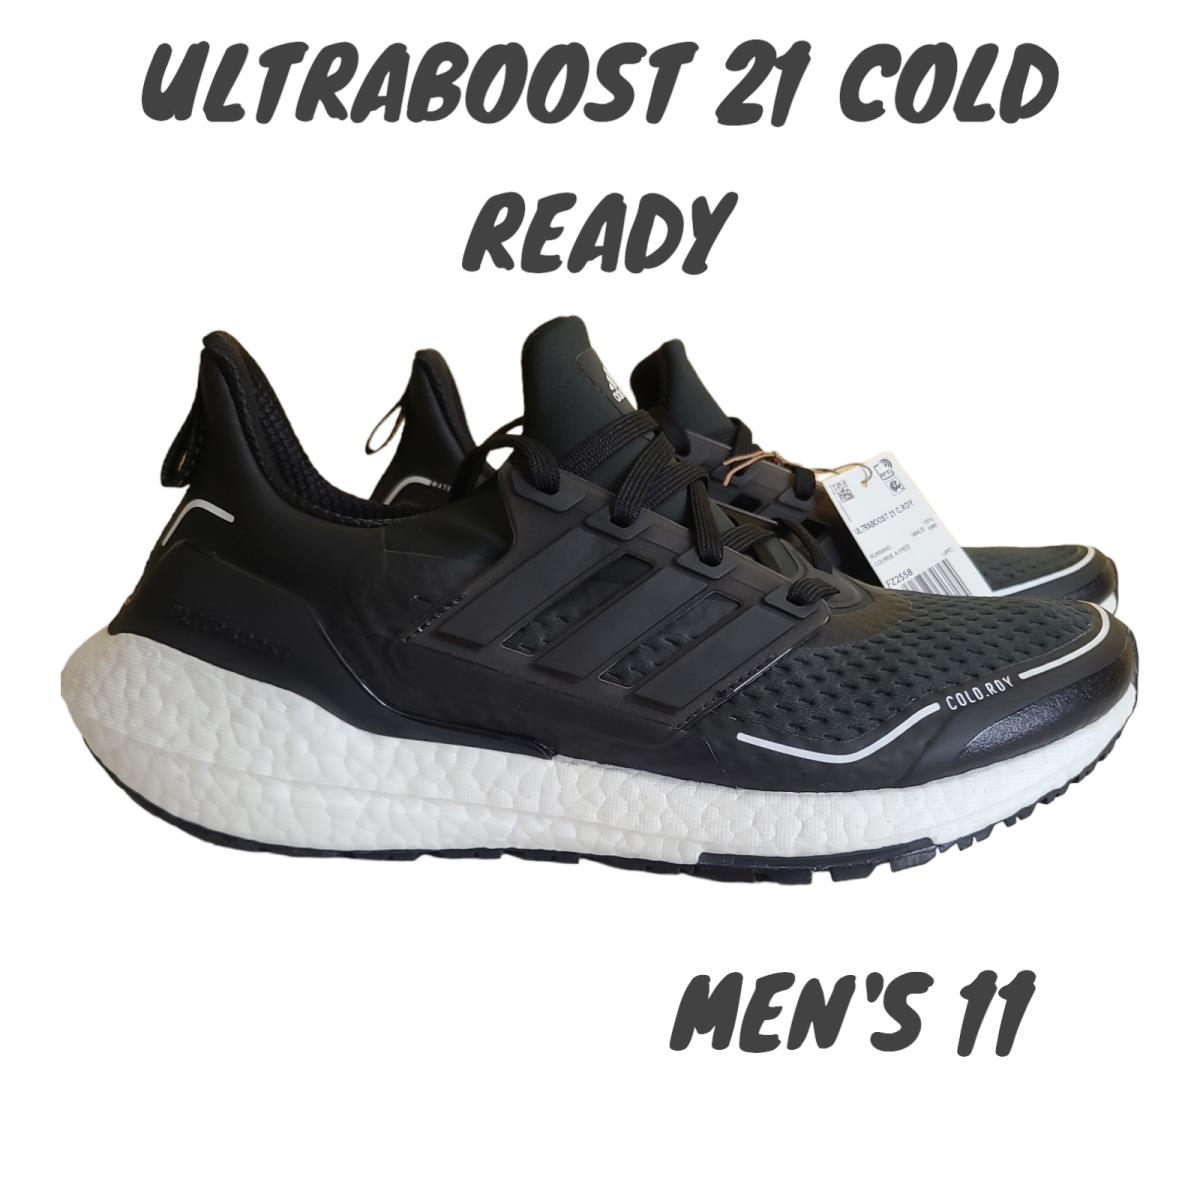 Adidas Ultraboost 21 Cold C.rdy Black FZ2558 Running Shoe Sneaker Mens Sz 11